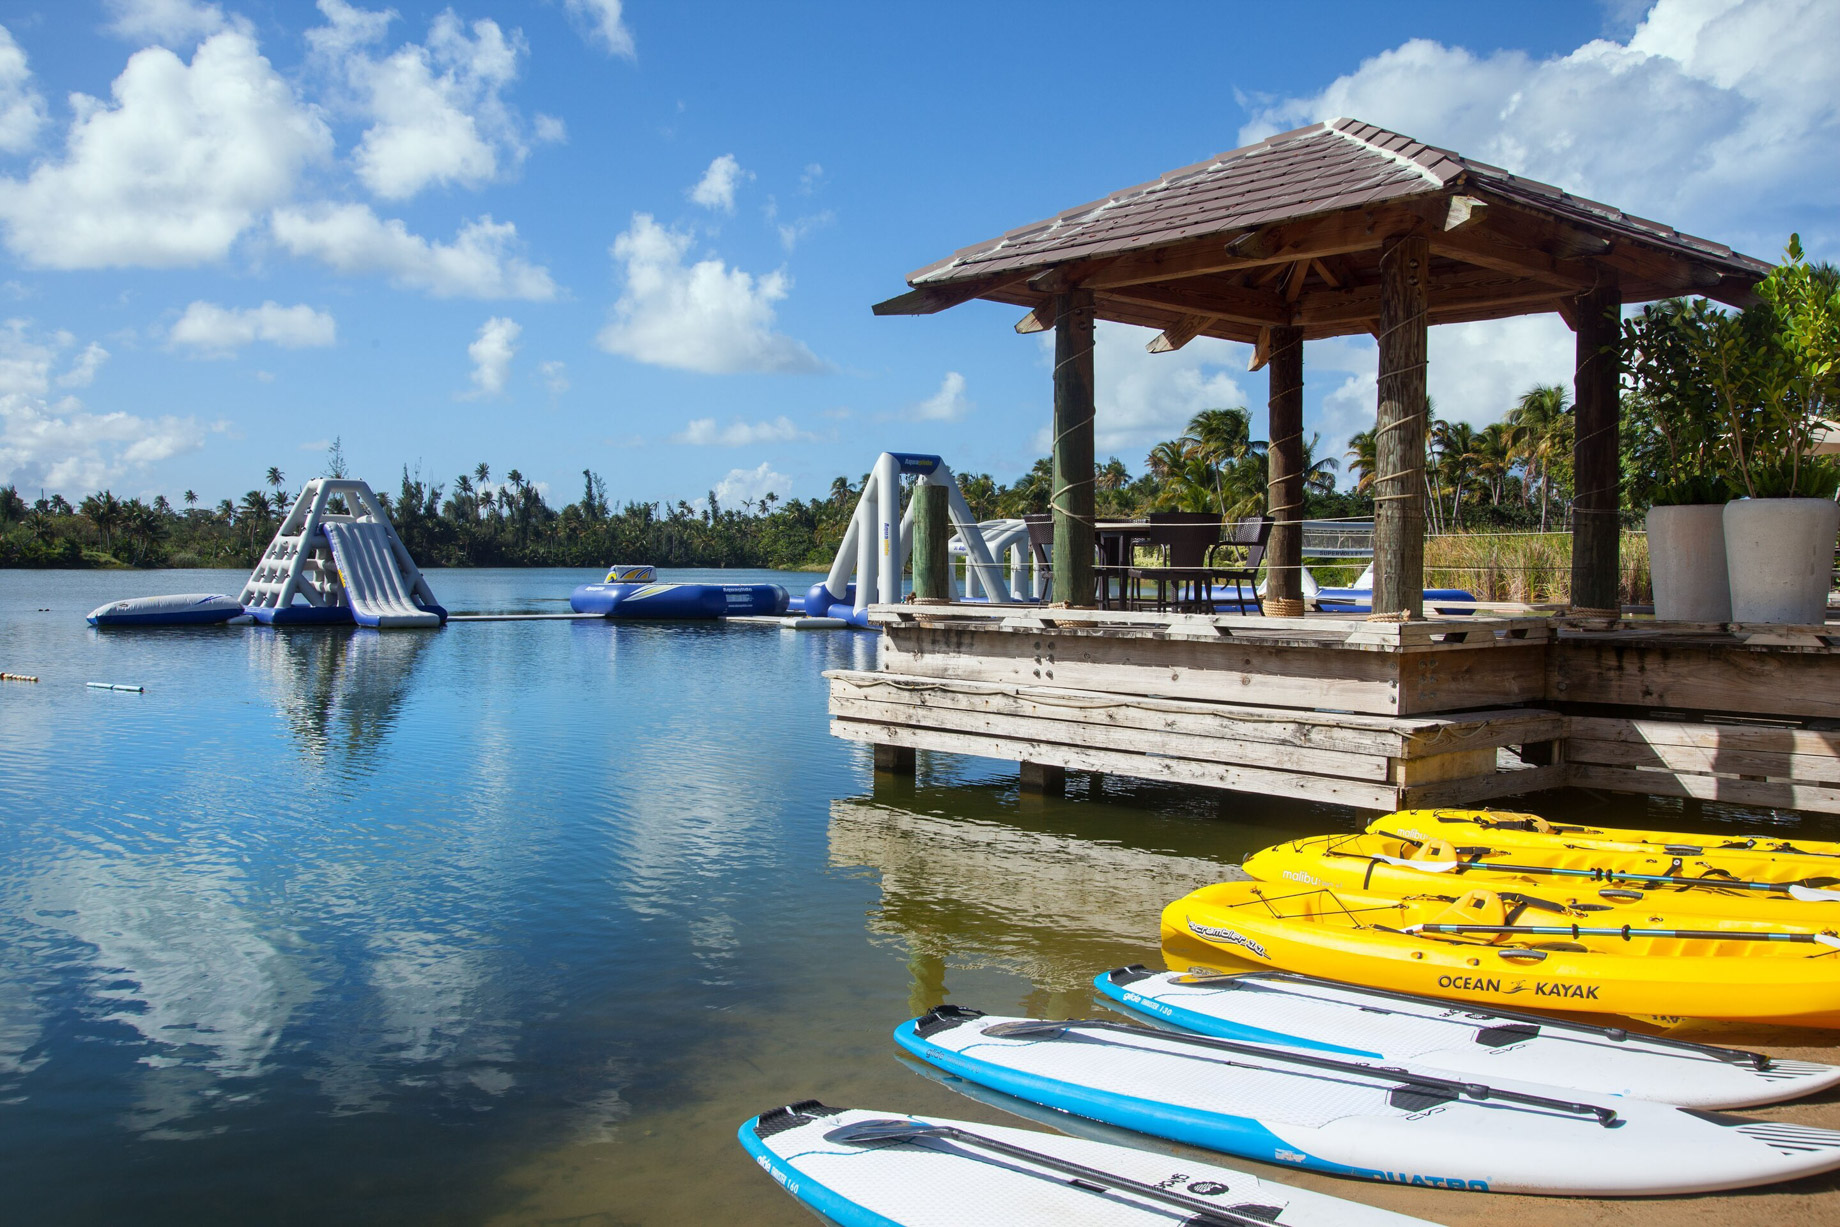 The St. Regis Bahia Beach Resort – Rio Grande, Puerto Rico – Boat House